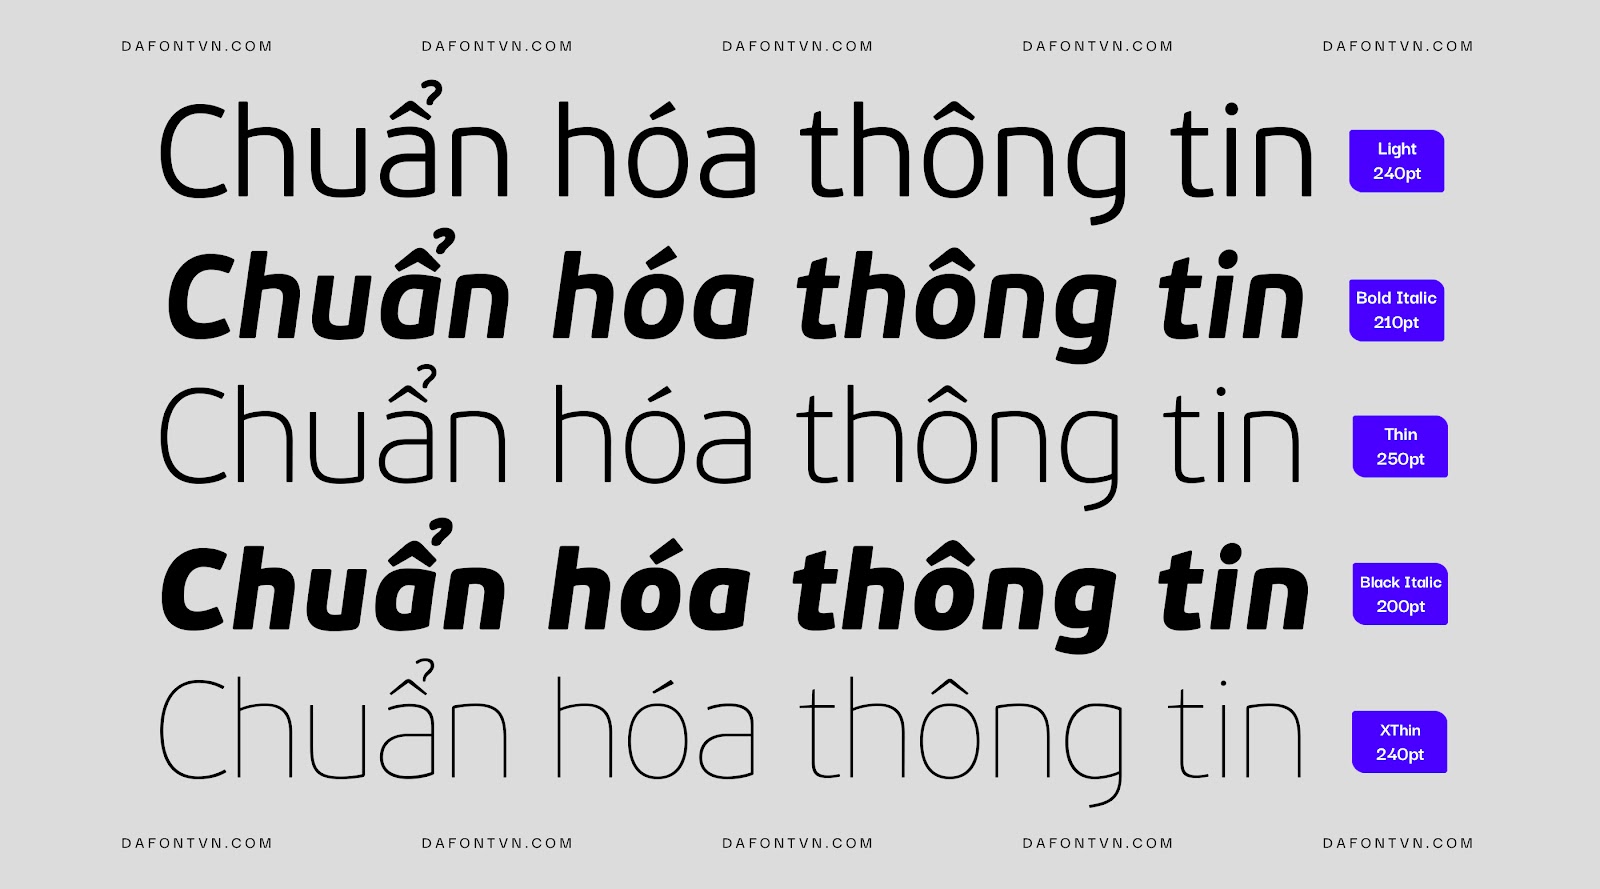 Download trọn bộ font PF Beau Sans Pro Việt hóa (16 font)